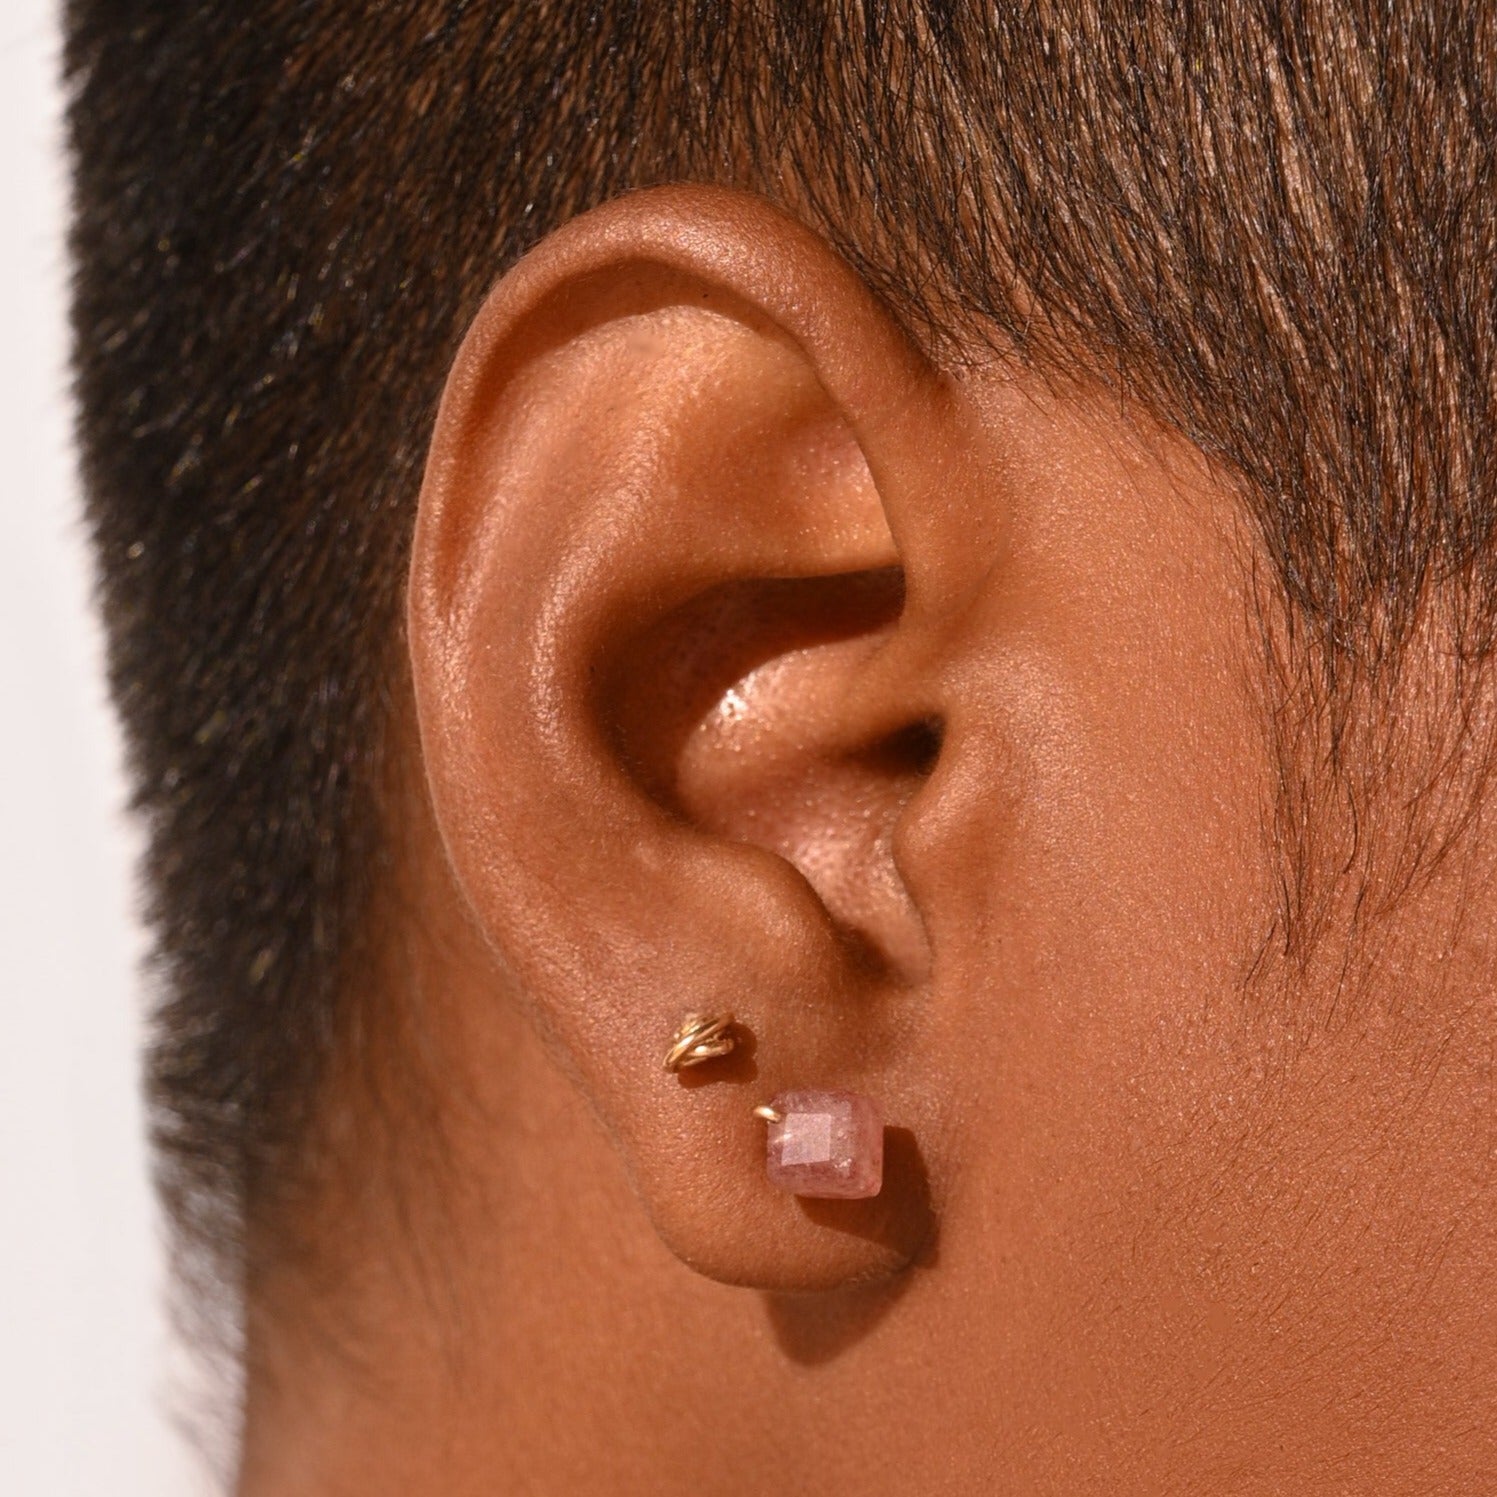 Solitario Earrings #1 (10mm) - Cuarzo Cherry Earrings TARBAY   